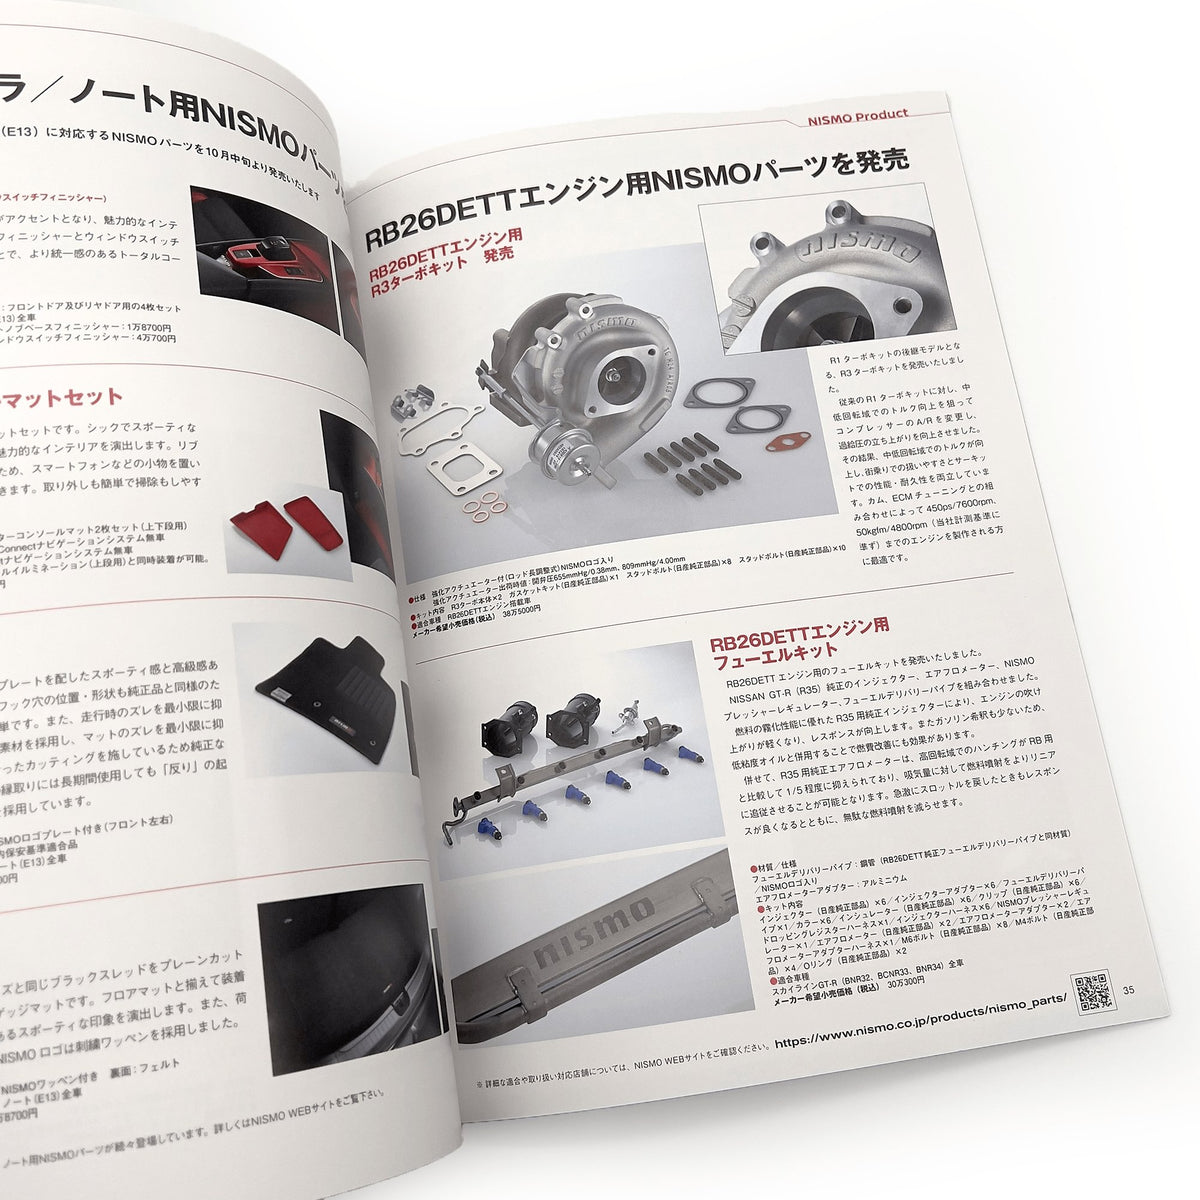 New Nissan JDM Nismo Japan N Blood Motorsports Racing Magazine #92 - Sugoi JDM